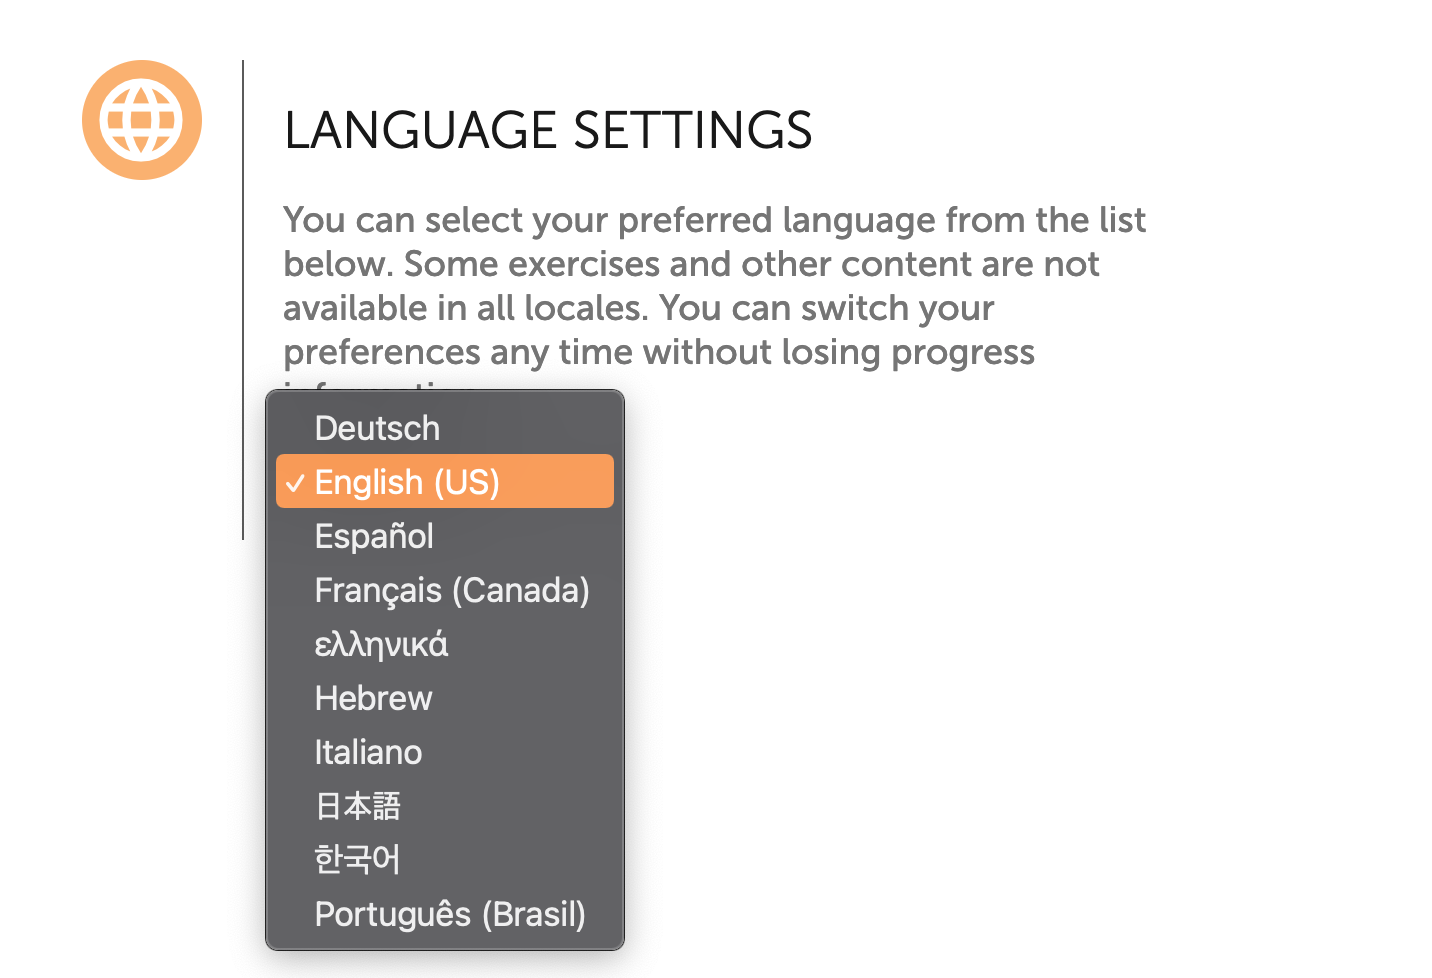 A screenshot of a language setting